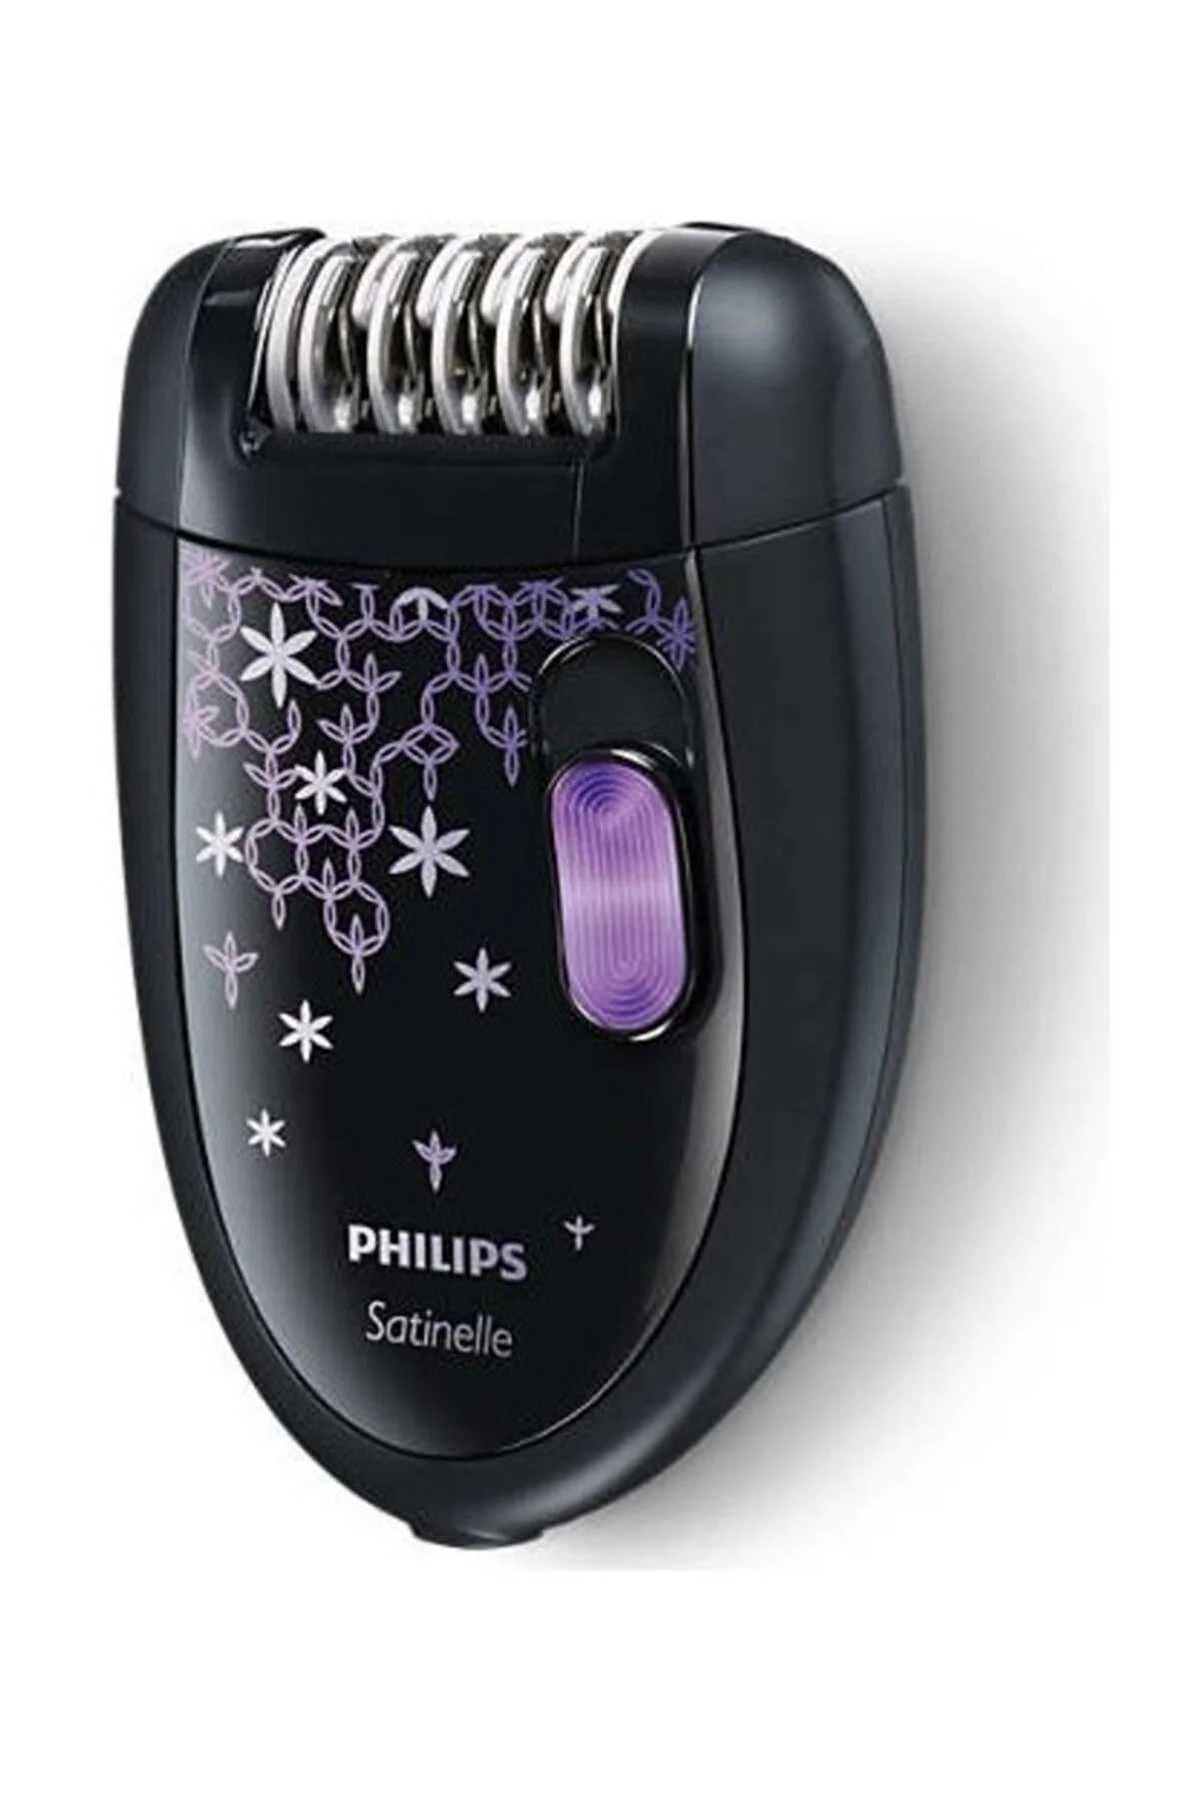 اپیلاتور ماساژور Philips کد.1039